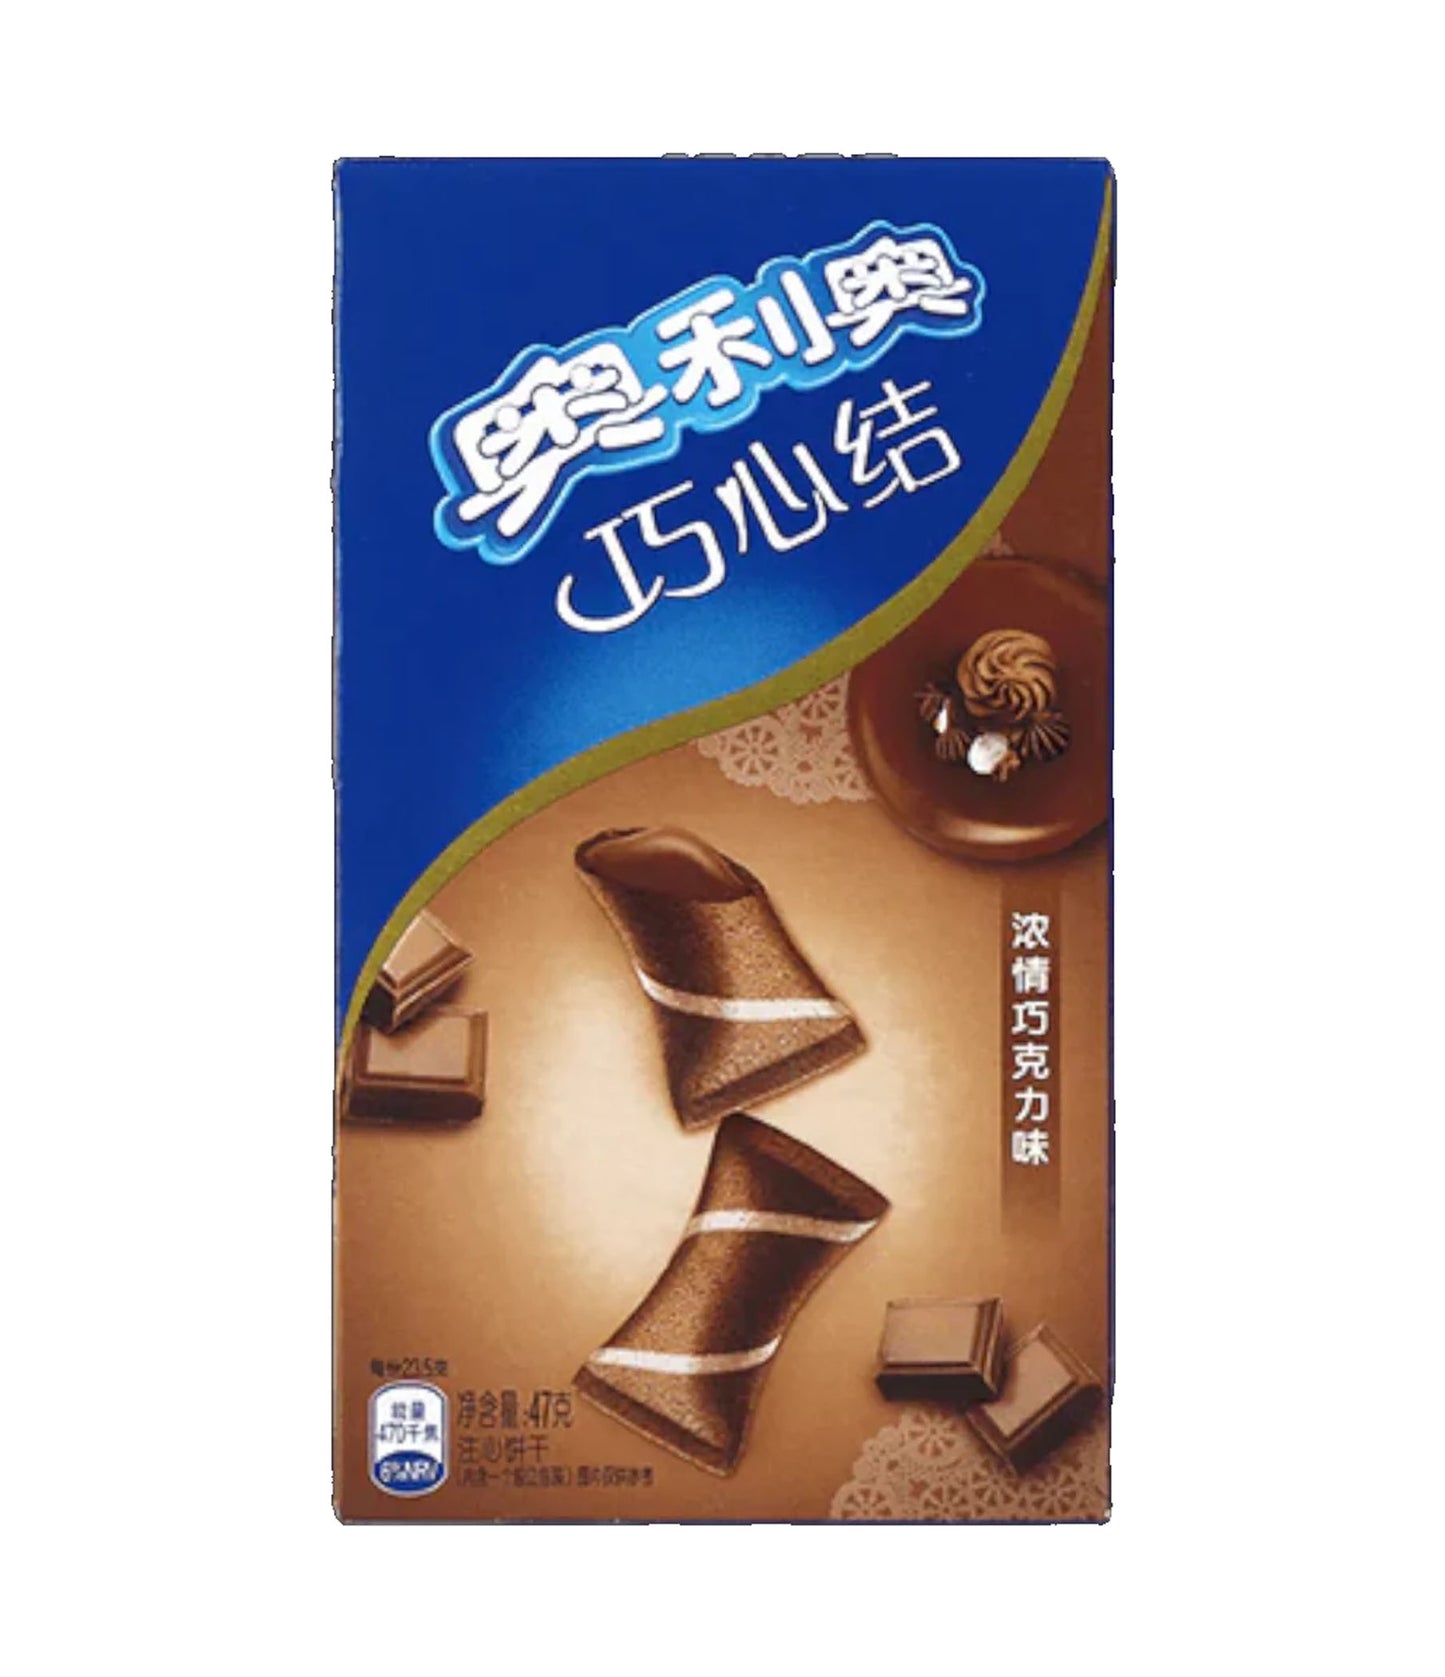 Oreo – Wafer Bites (Chocolate Flavor) 47g